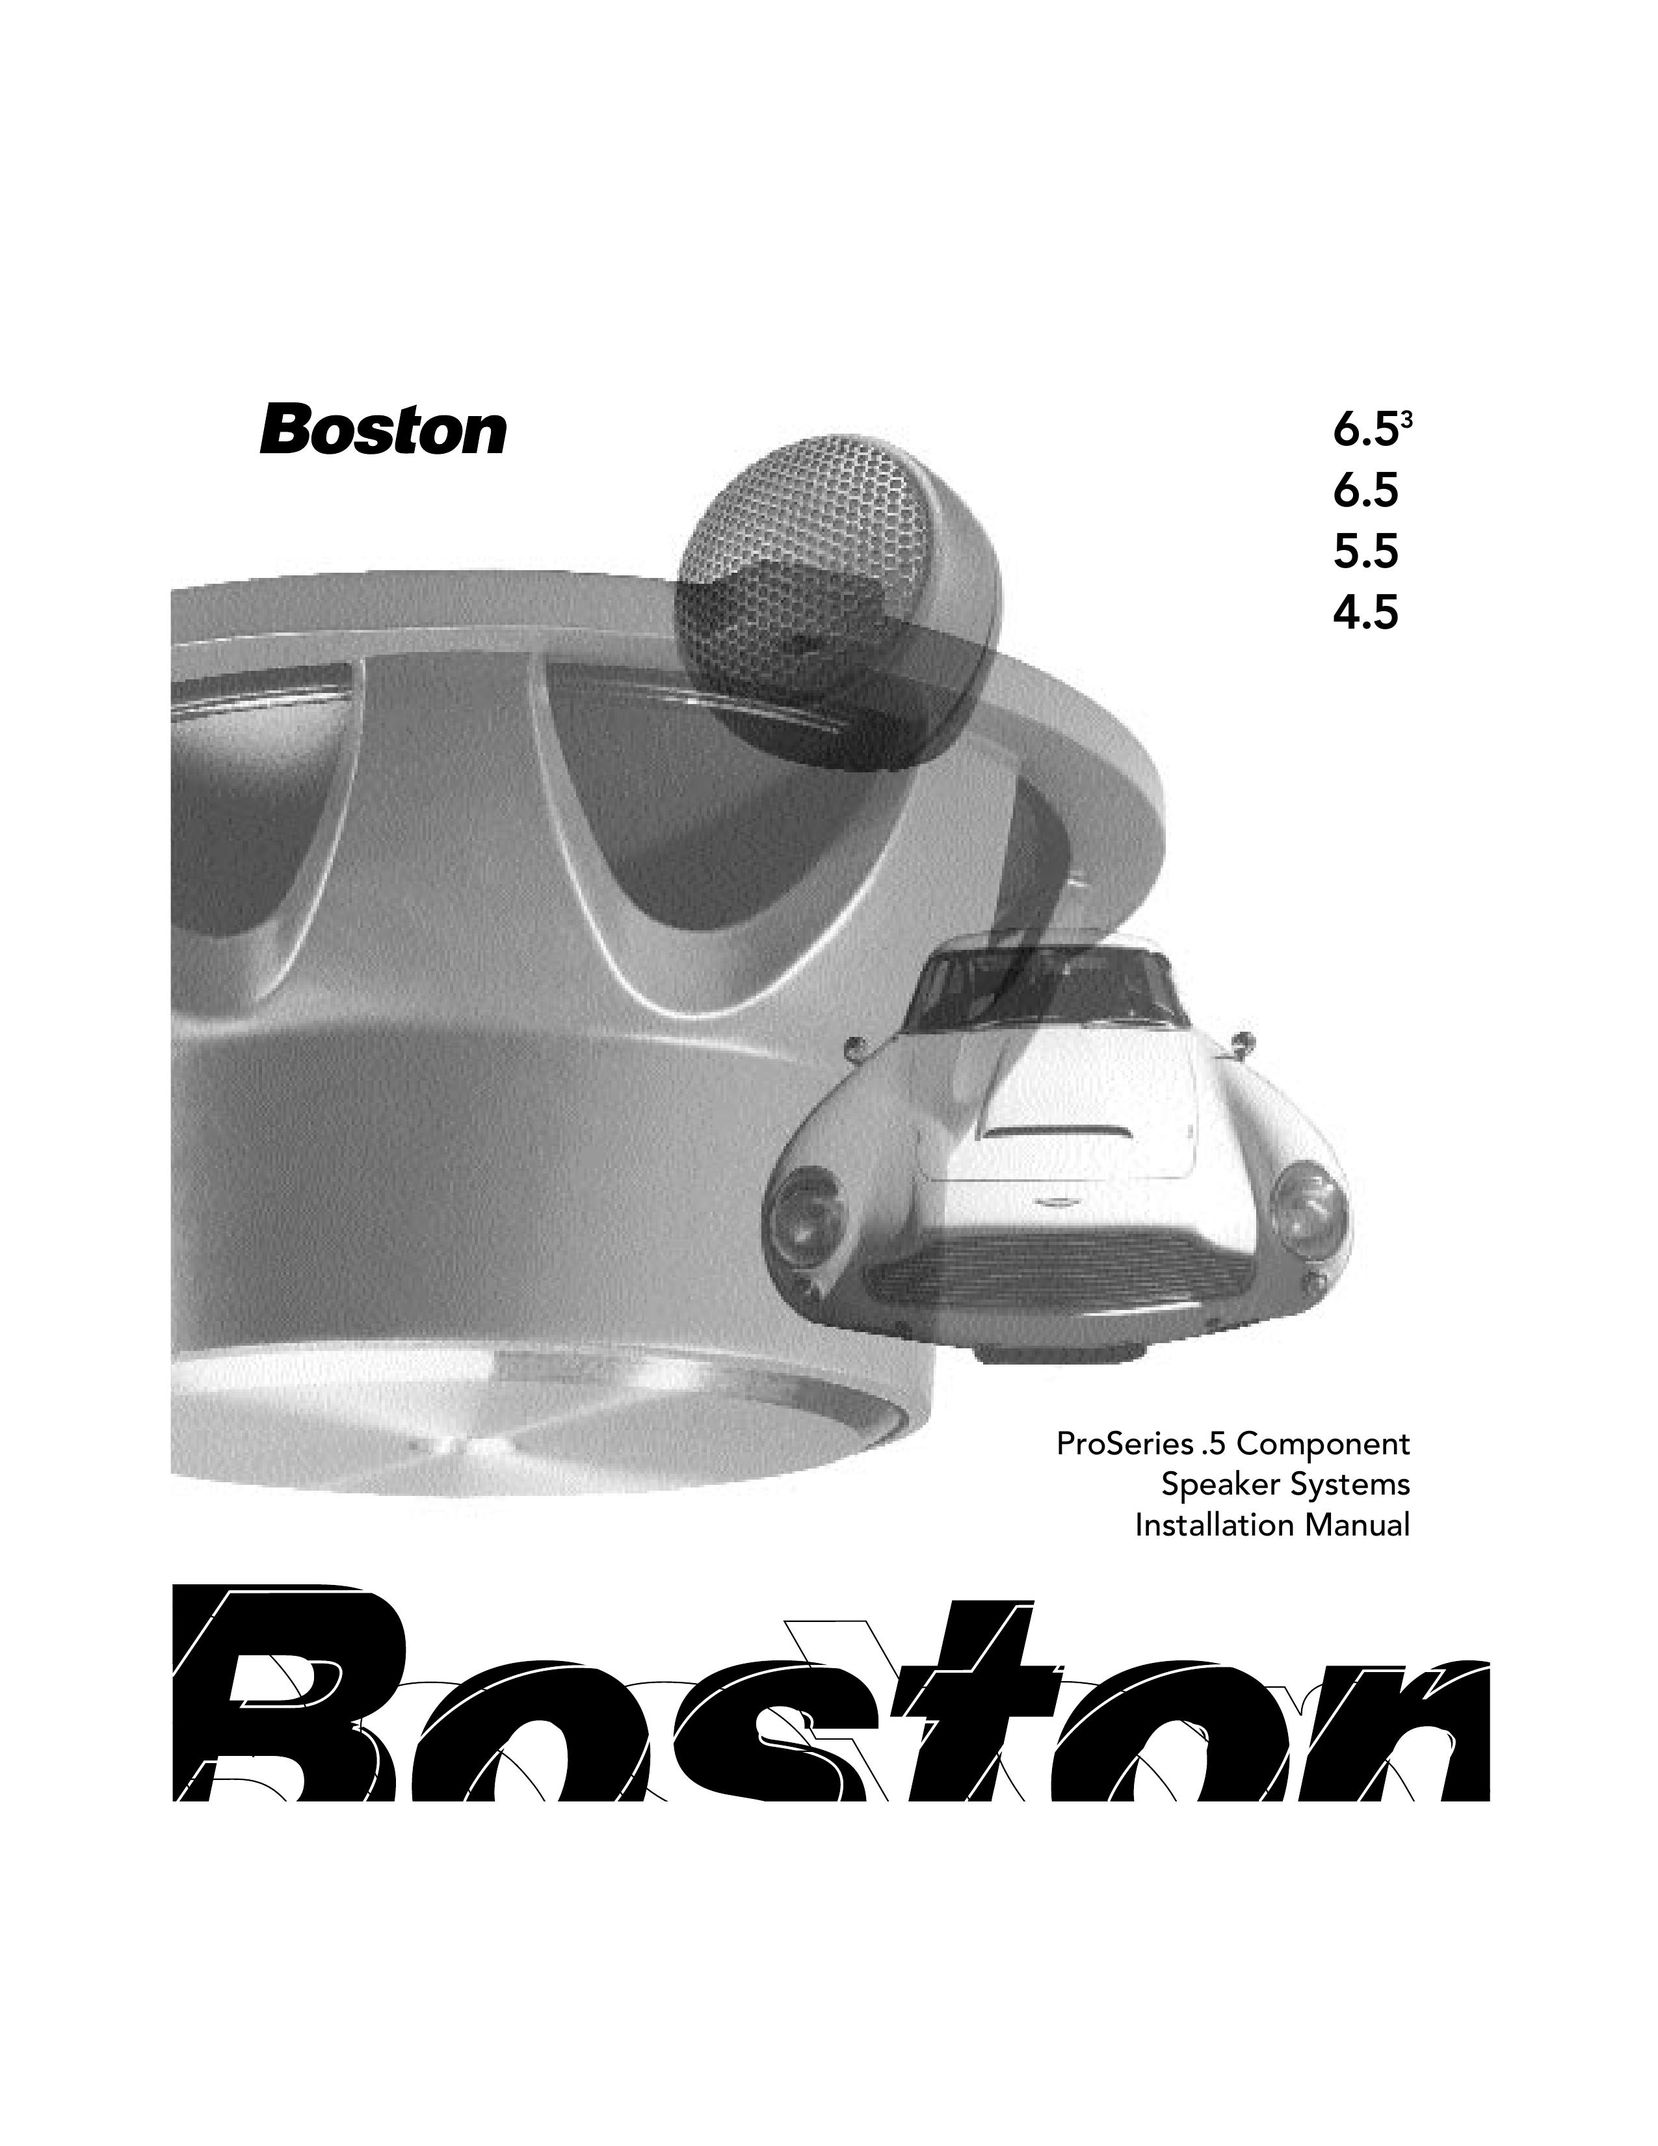 Boston Acoustics 6.53 Car Speaker User Manual